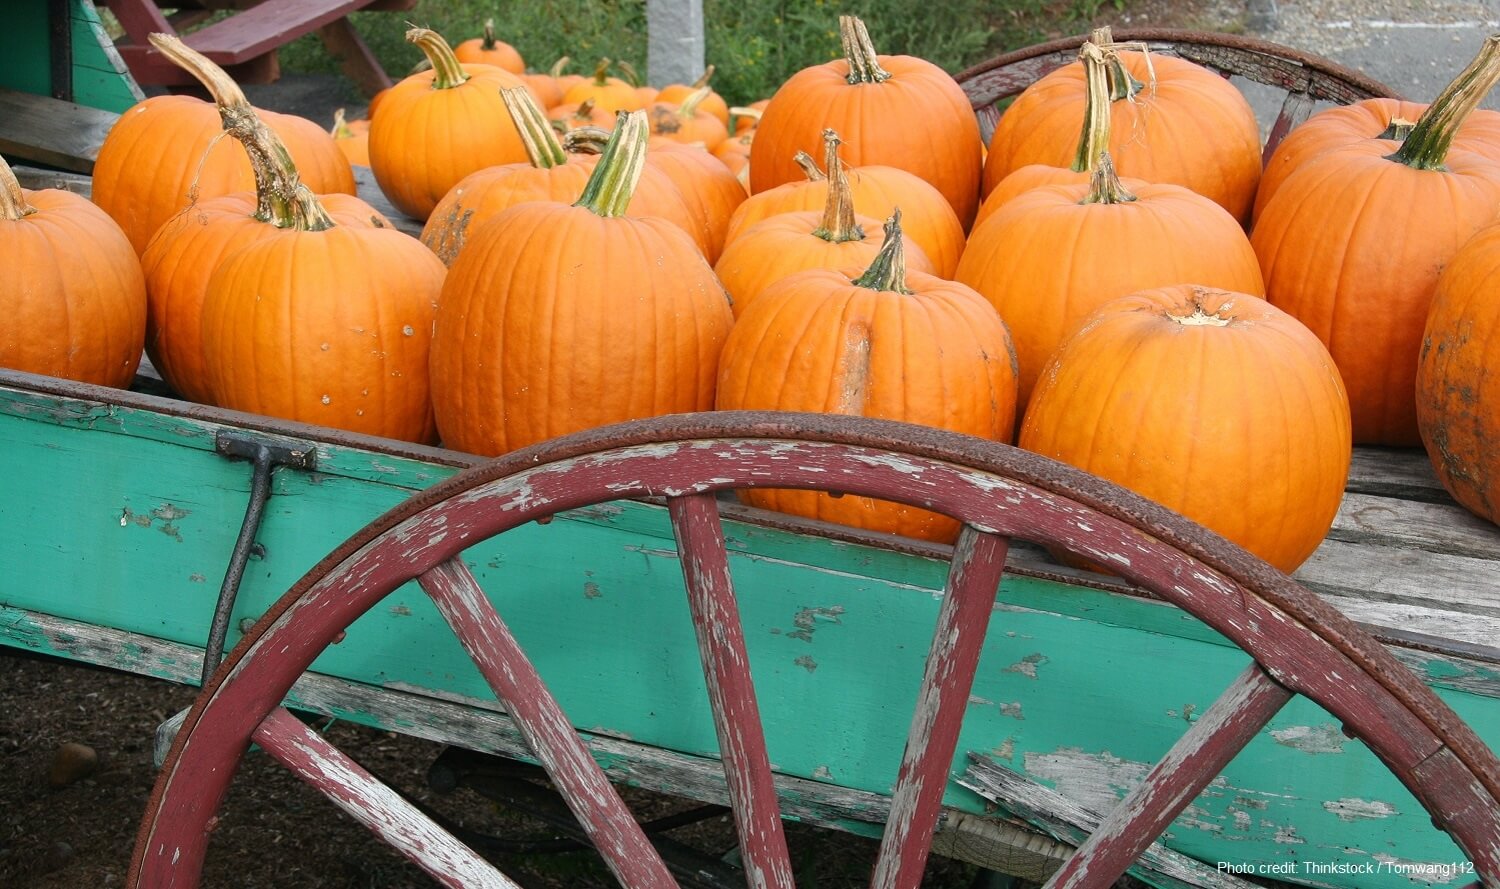 pumpkins on a teal wagon